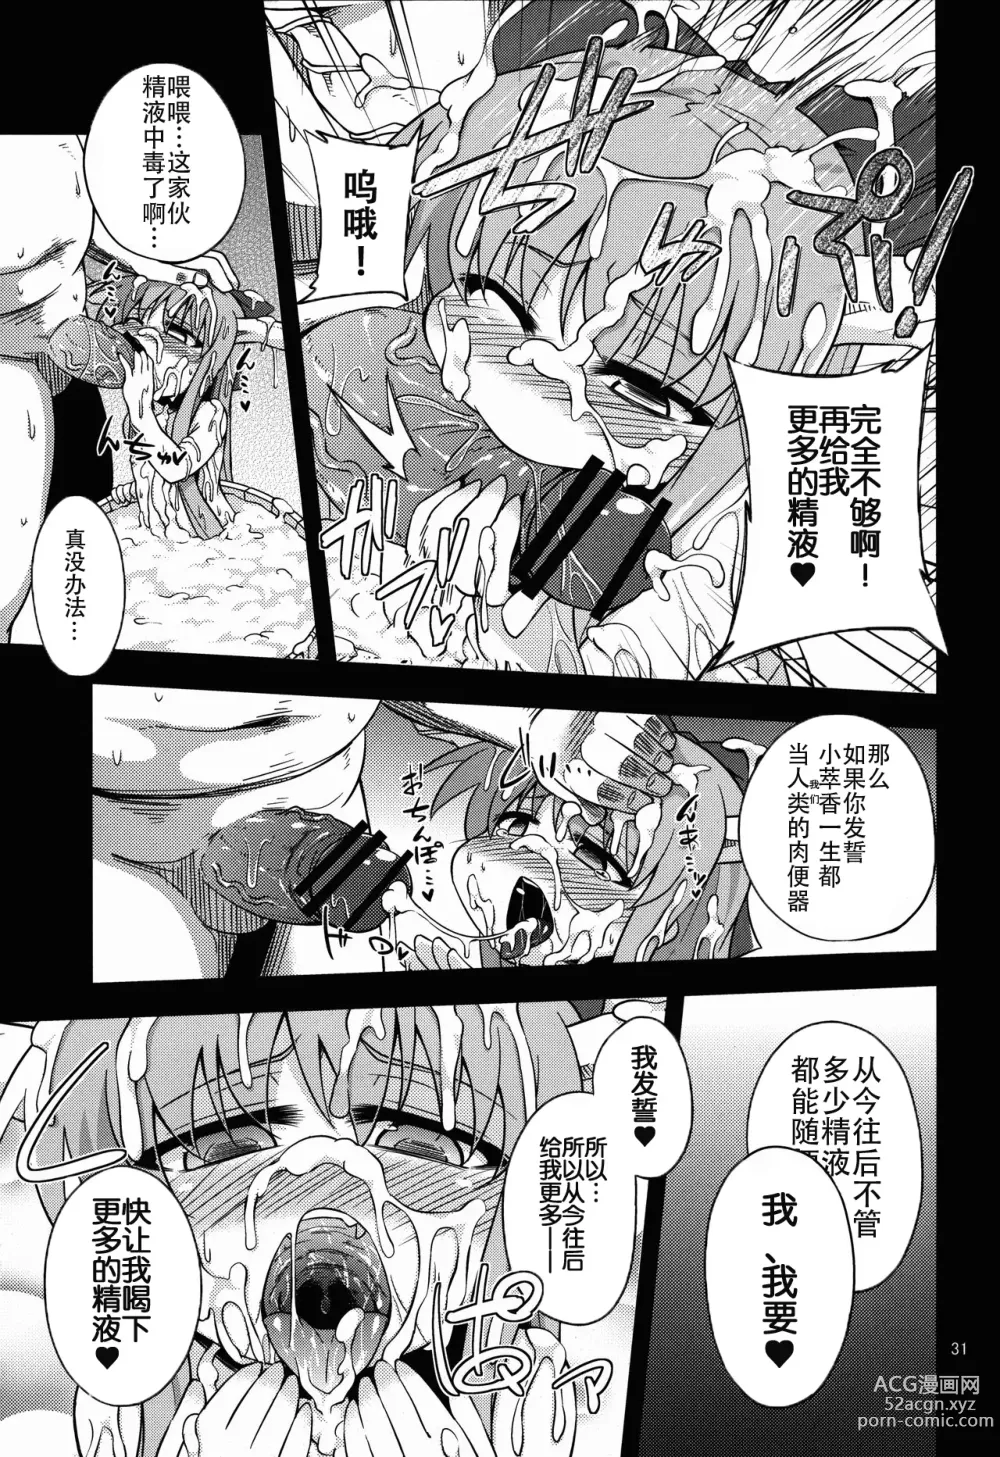 Page 31 of doujinshi Oni Hankyo Hanki